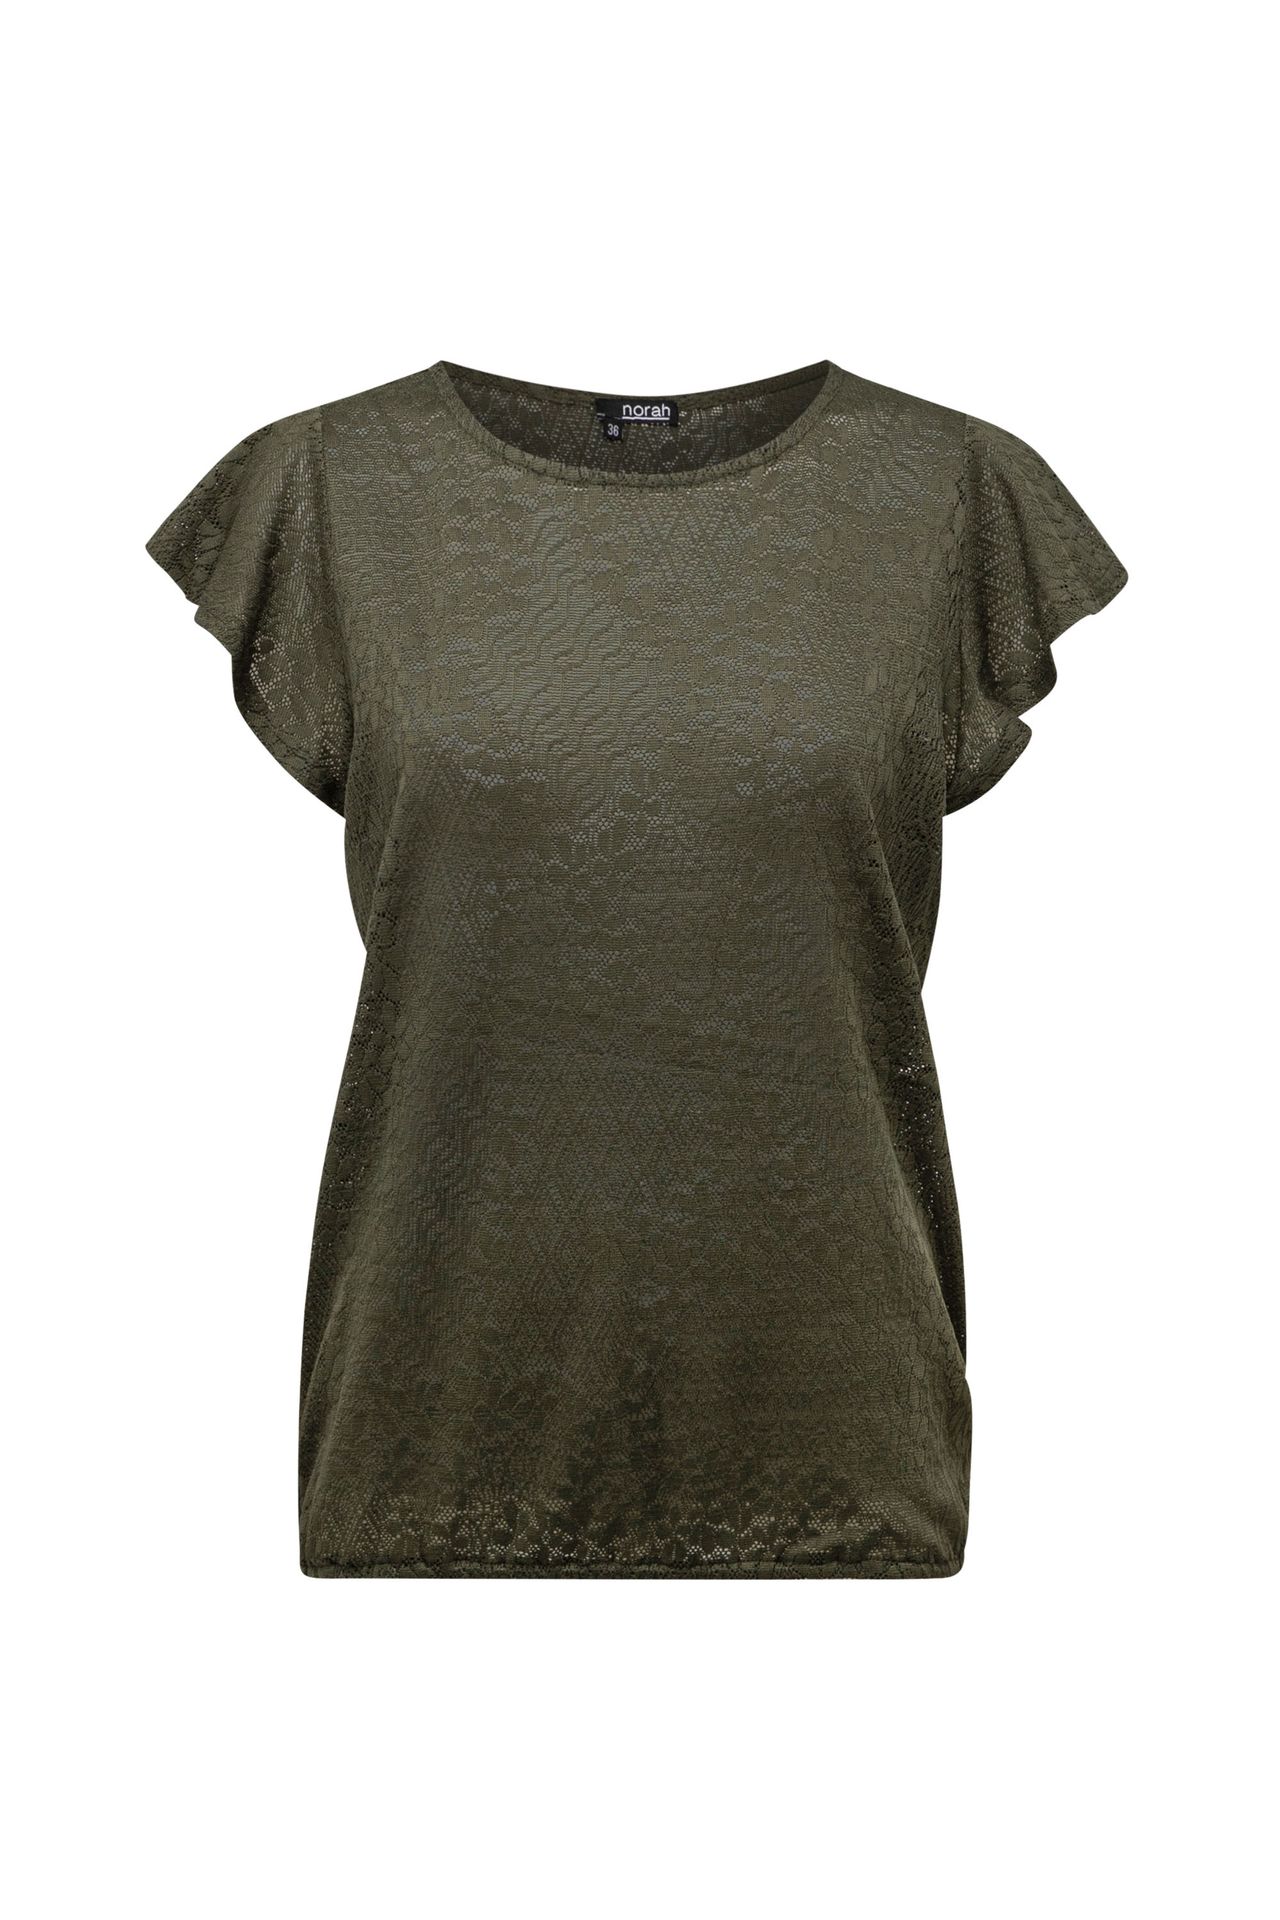 Norah Legergroen shirt dark army 213613-580